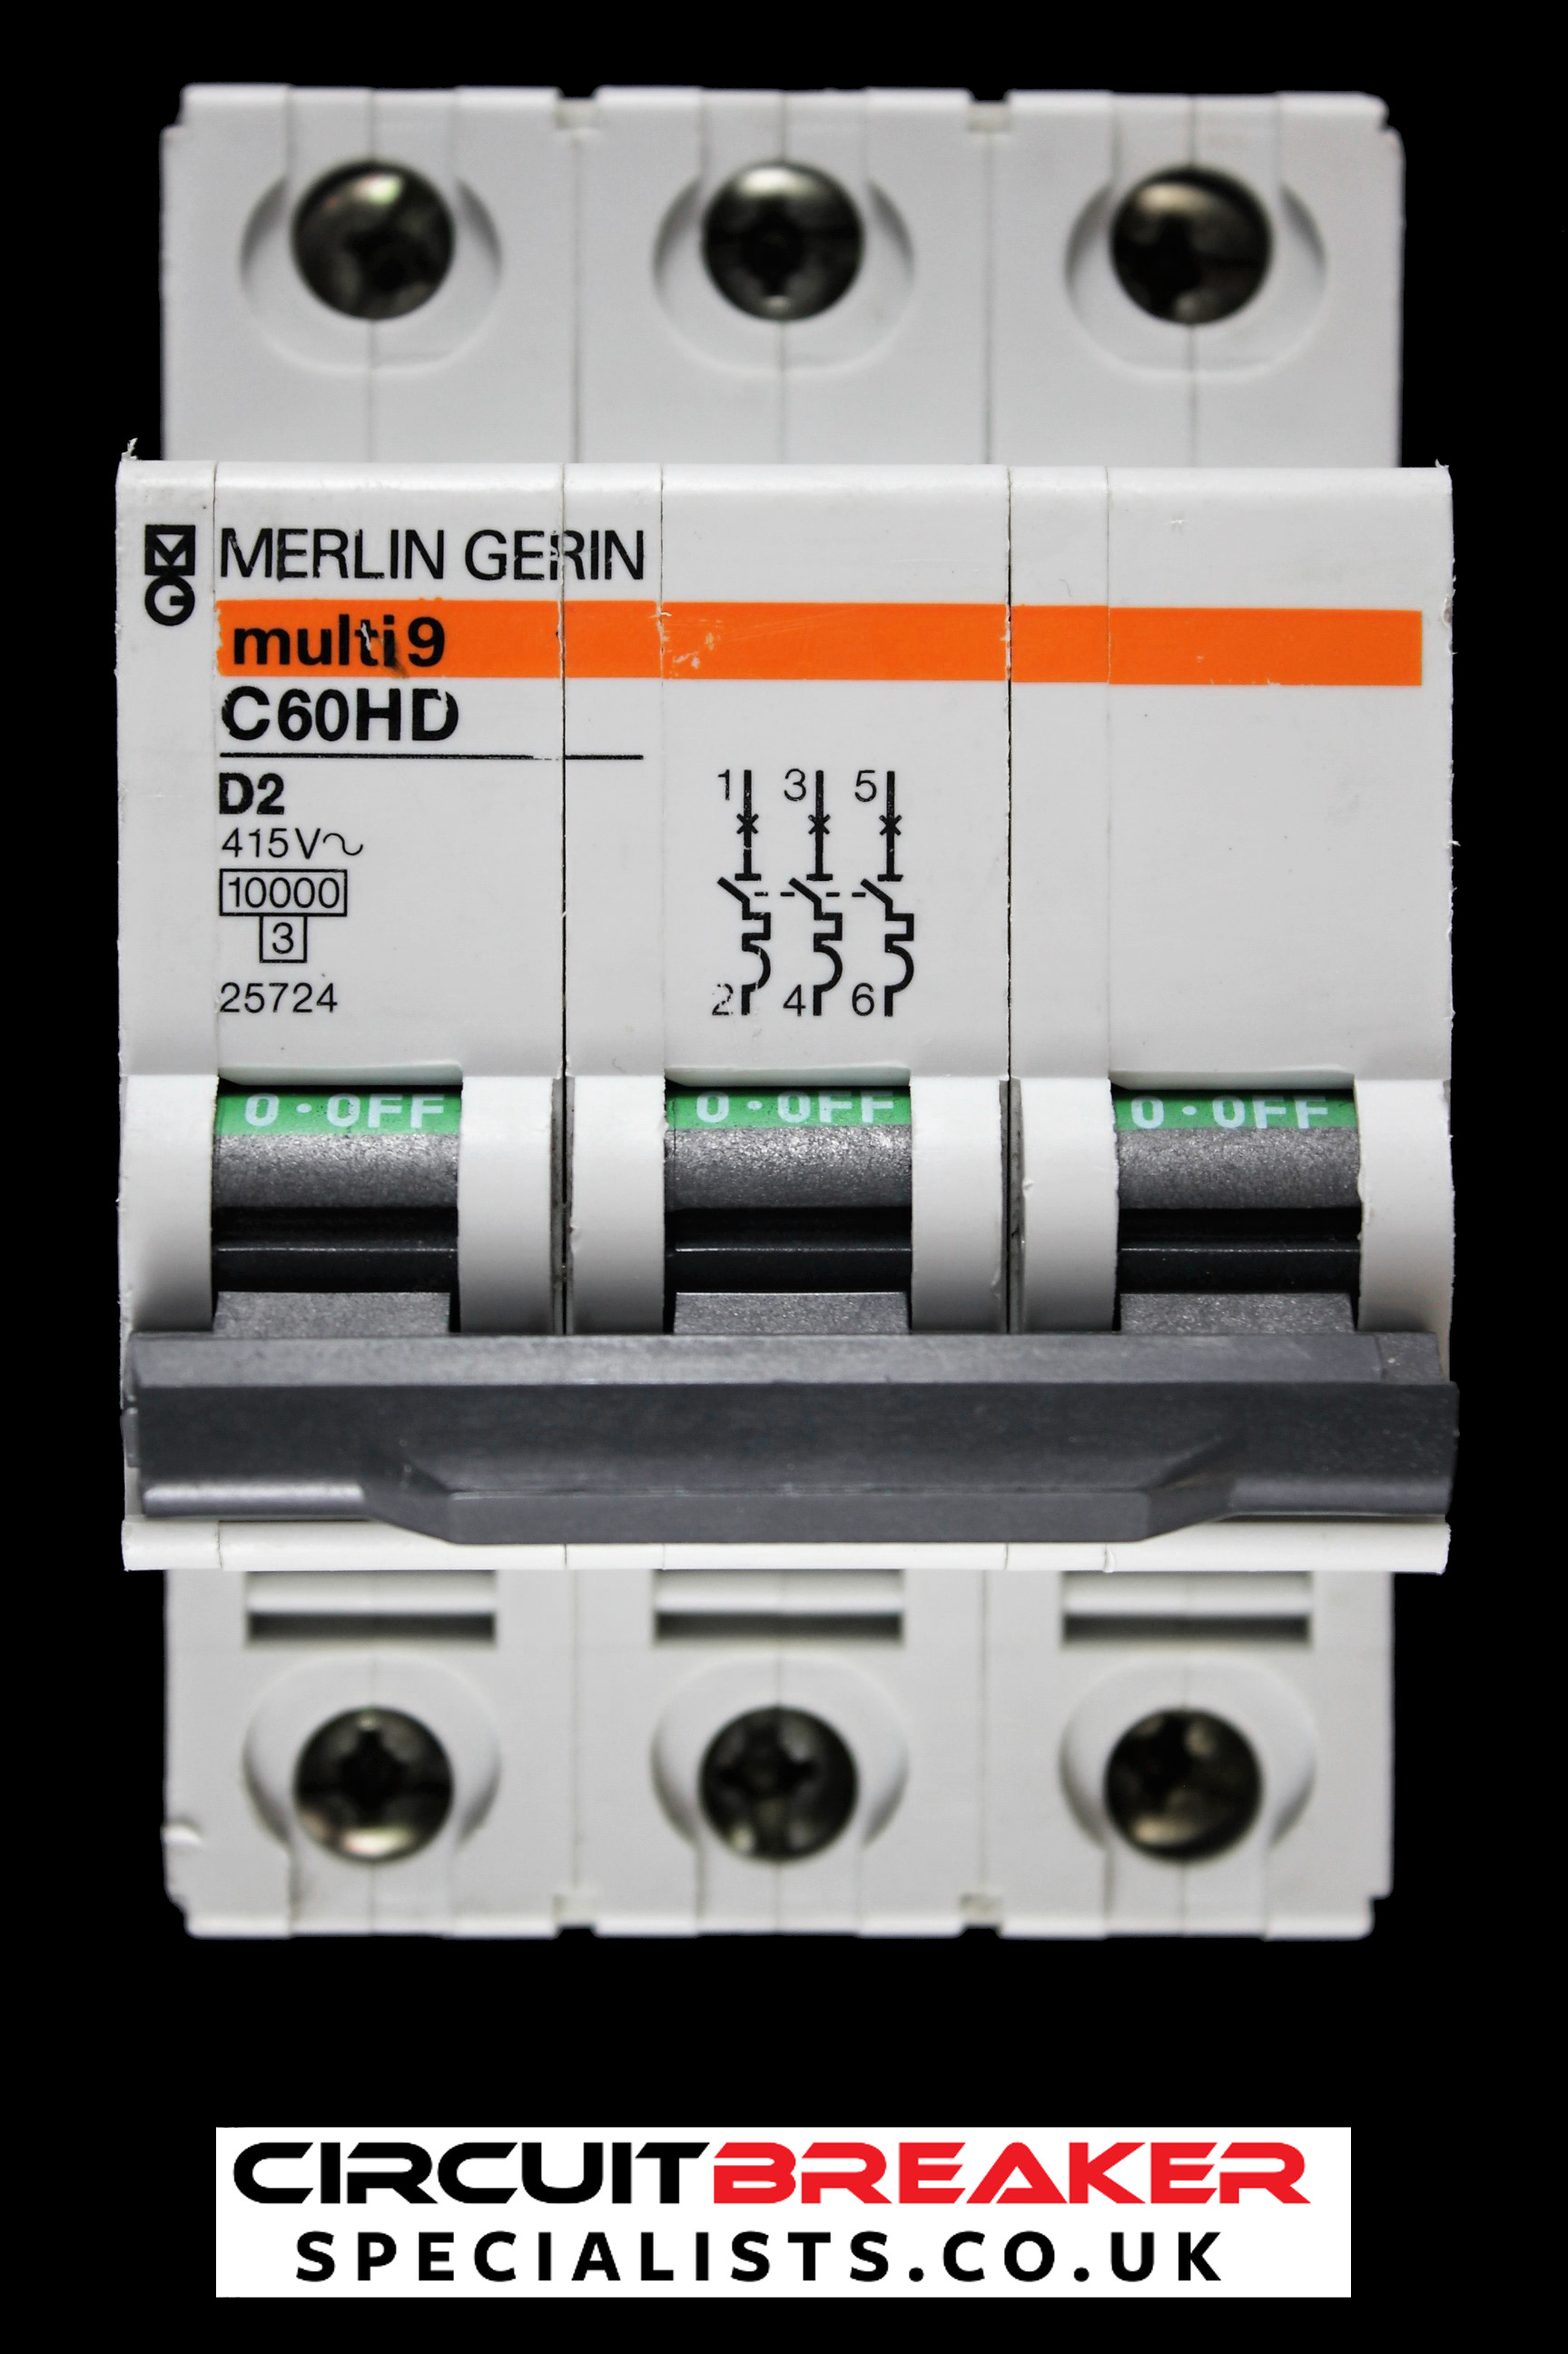 MERLIN GERIN 2 AMP CURVE D 10kA TRIPLE POLE MCB CIRCUIT BREAKER C60HD 25724